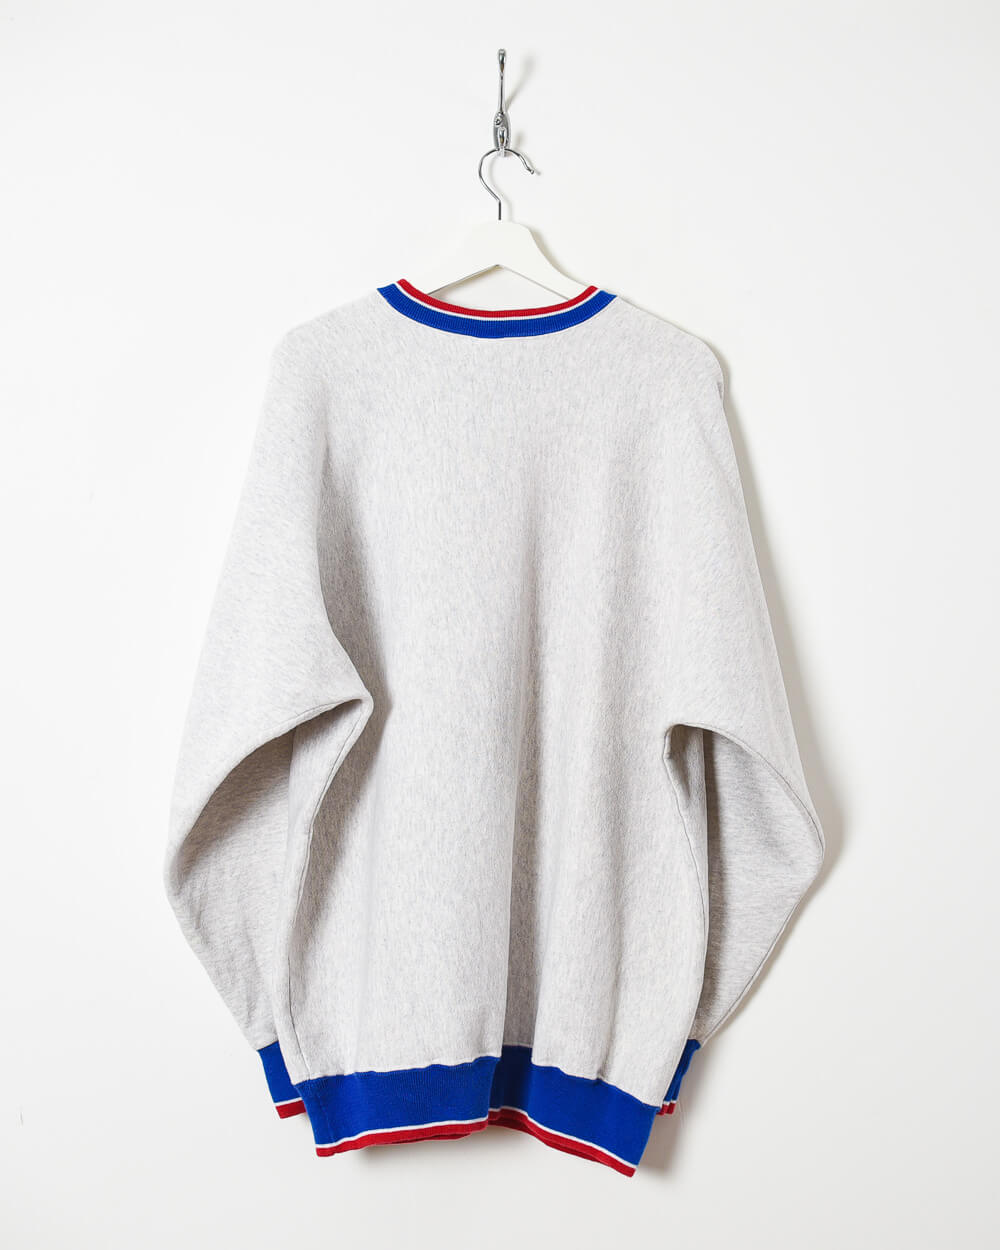 Buffalo Bills Sweatshirt - X-Large - Domno Vintage 90s, 80s, 00s Retro and Vintage Clothing 